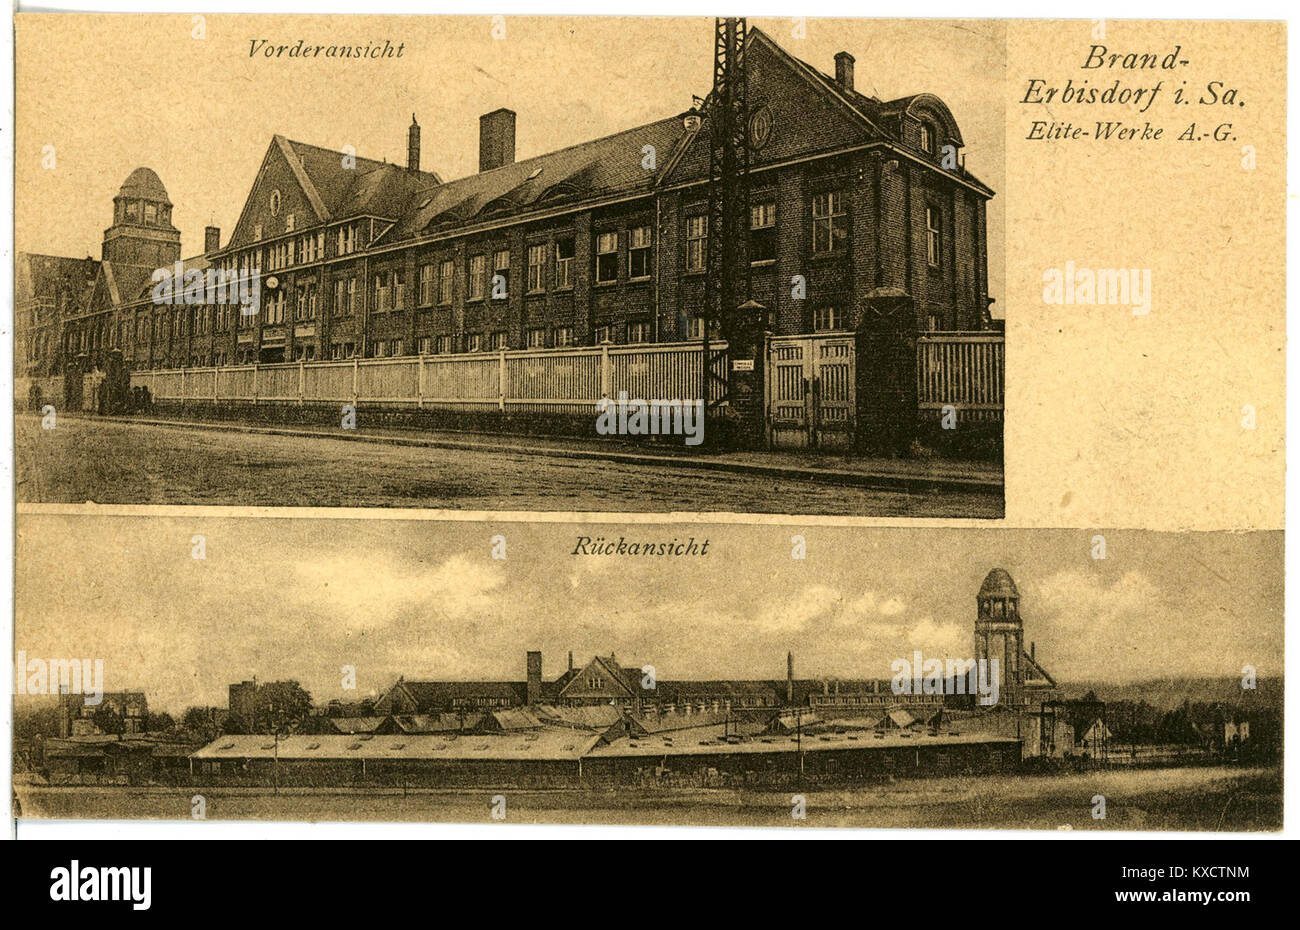 21729-Brand-Erbisdorf-1920-Elite Werke-Brück & Sohn Kunstverlag Foto Stock